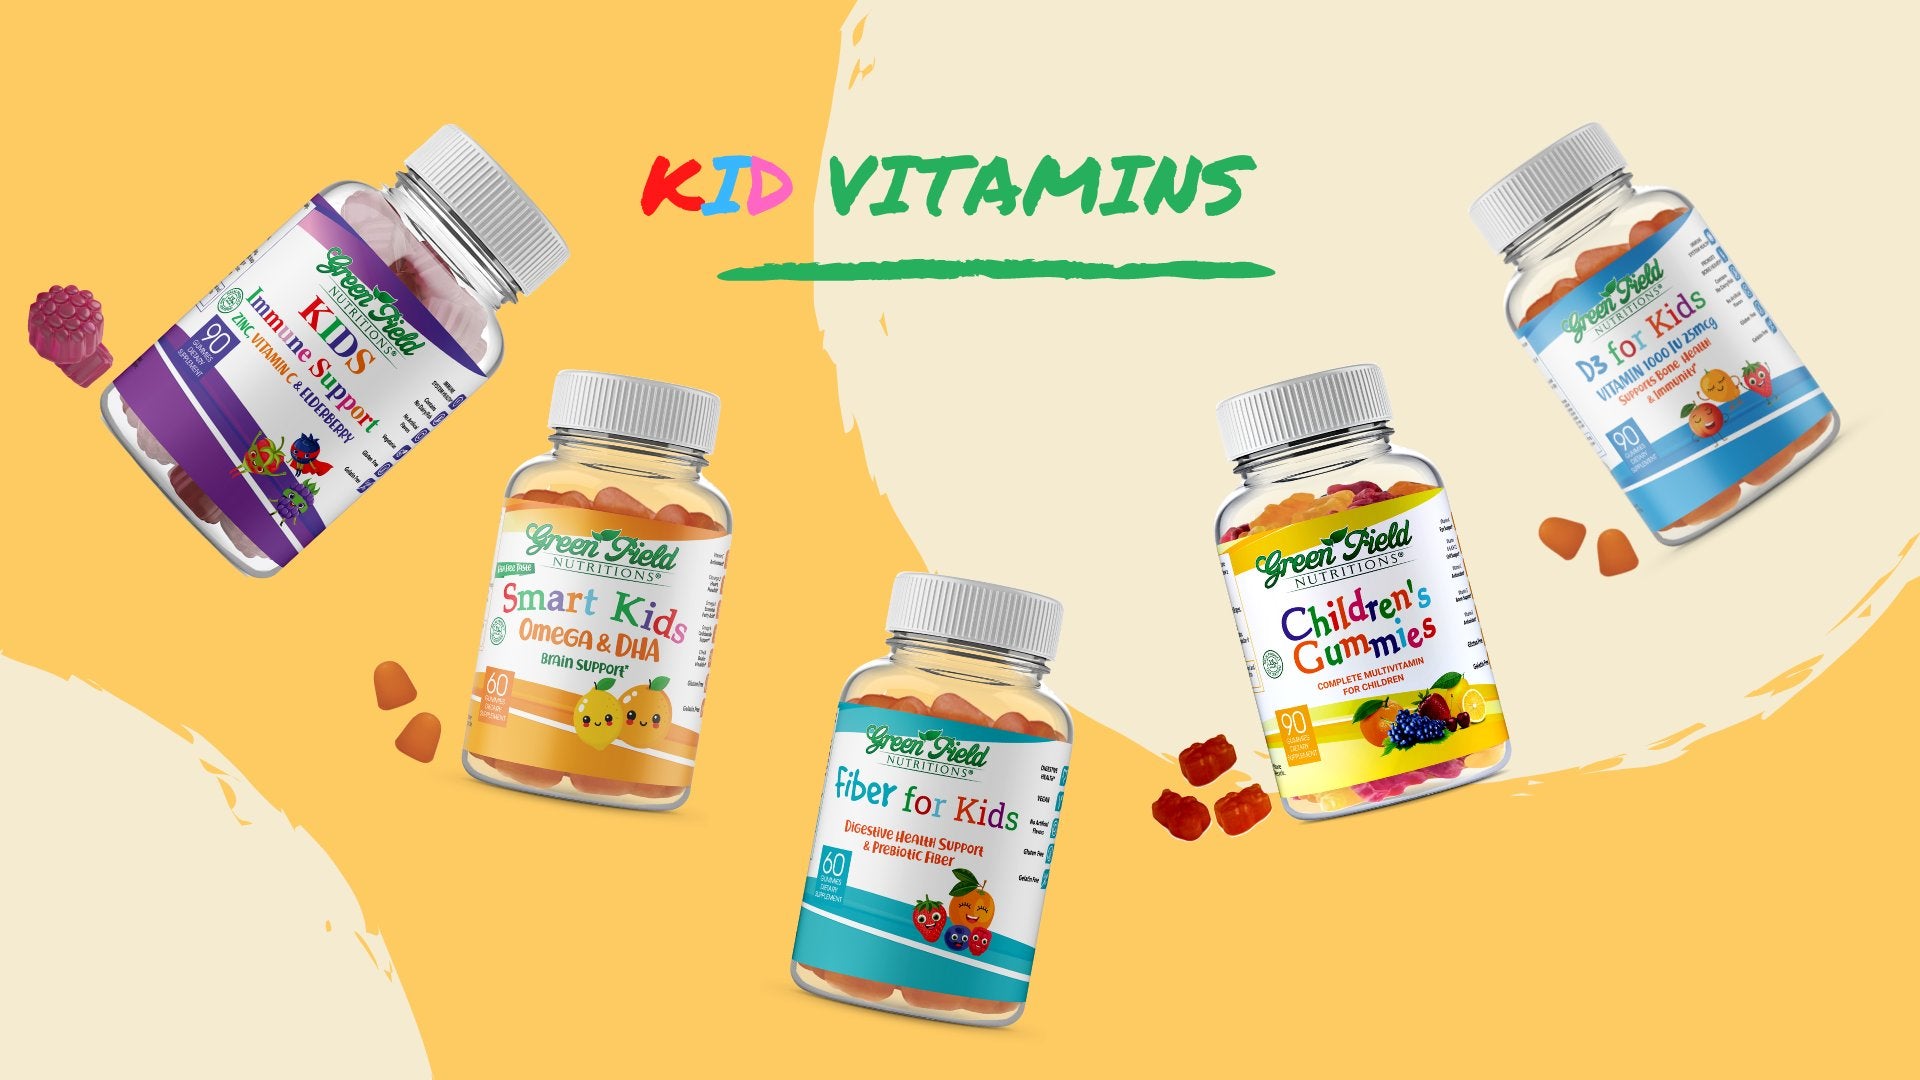 Halal Vitamins for Kids including Multivitamins for Kids, Halal vitamin D3 for Kids, Halal Vitamin C and Z for Kids and Fiber for Kids